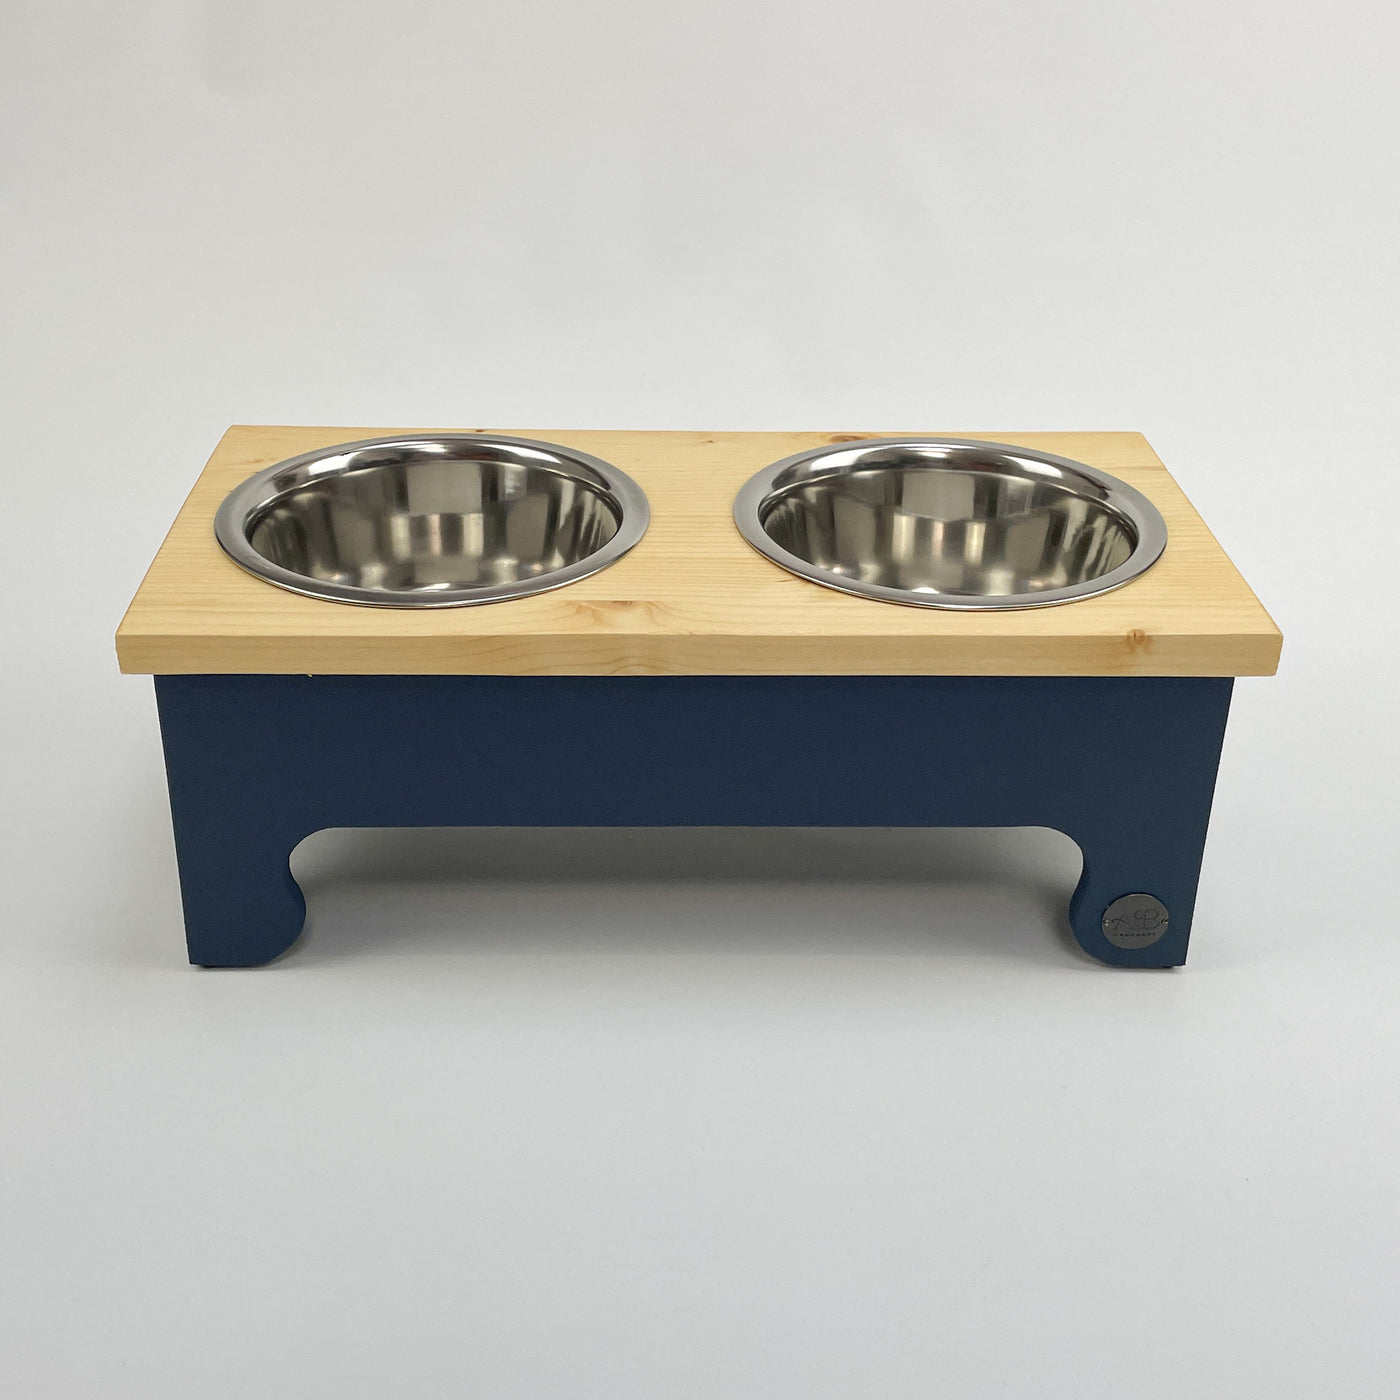 Navy, medium sized, pine top, raised dog bowl feeding stand